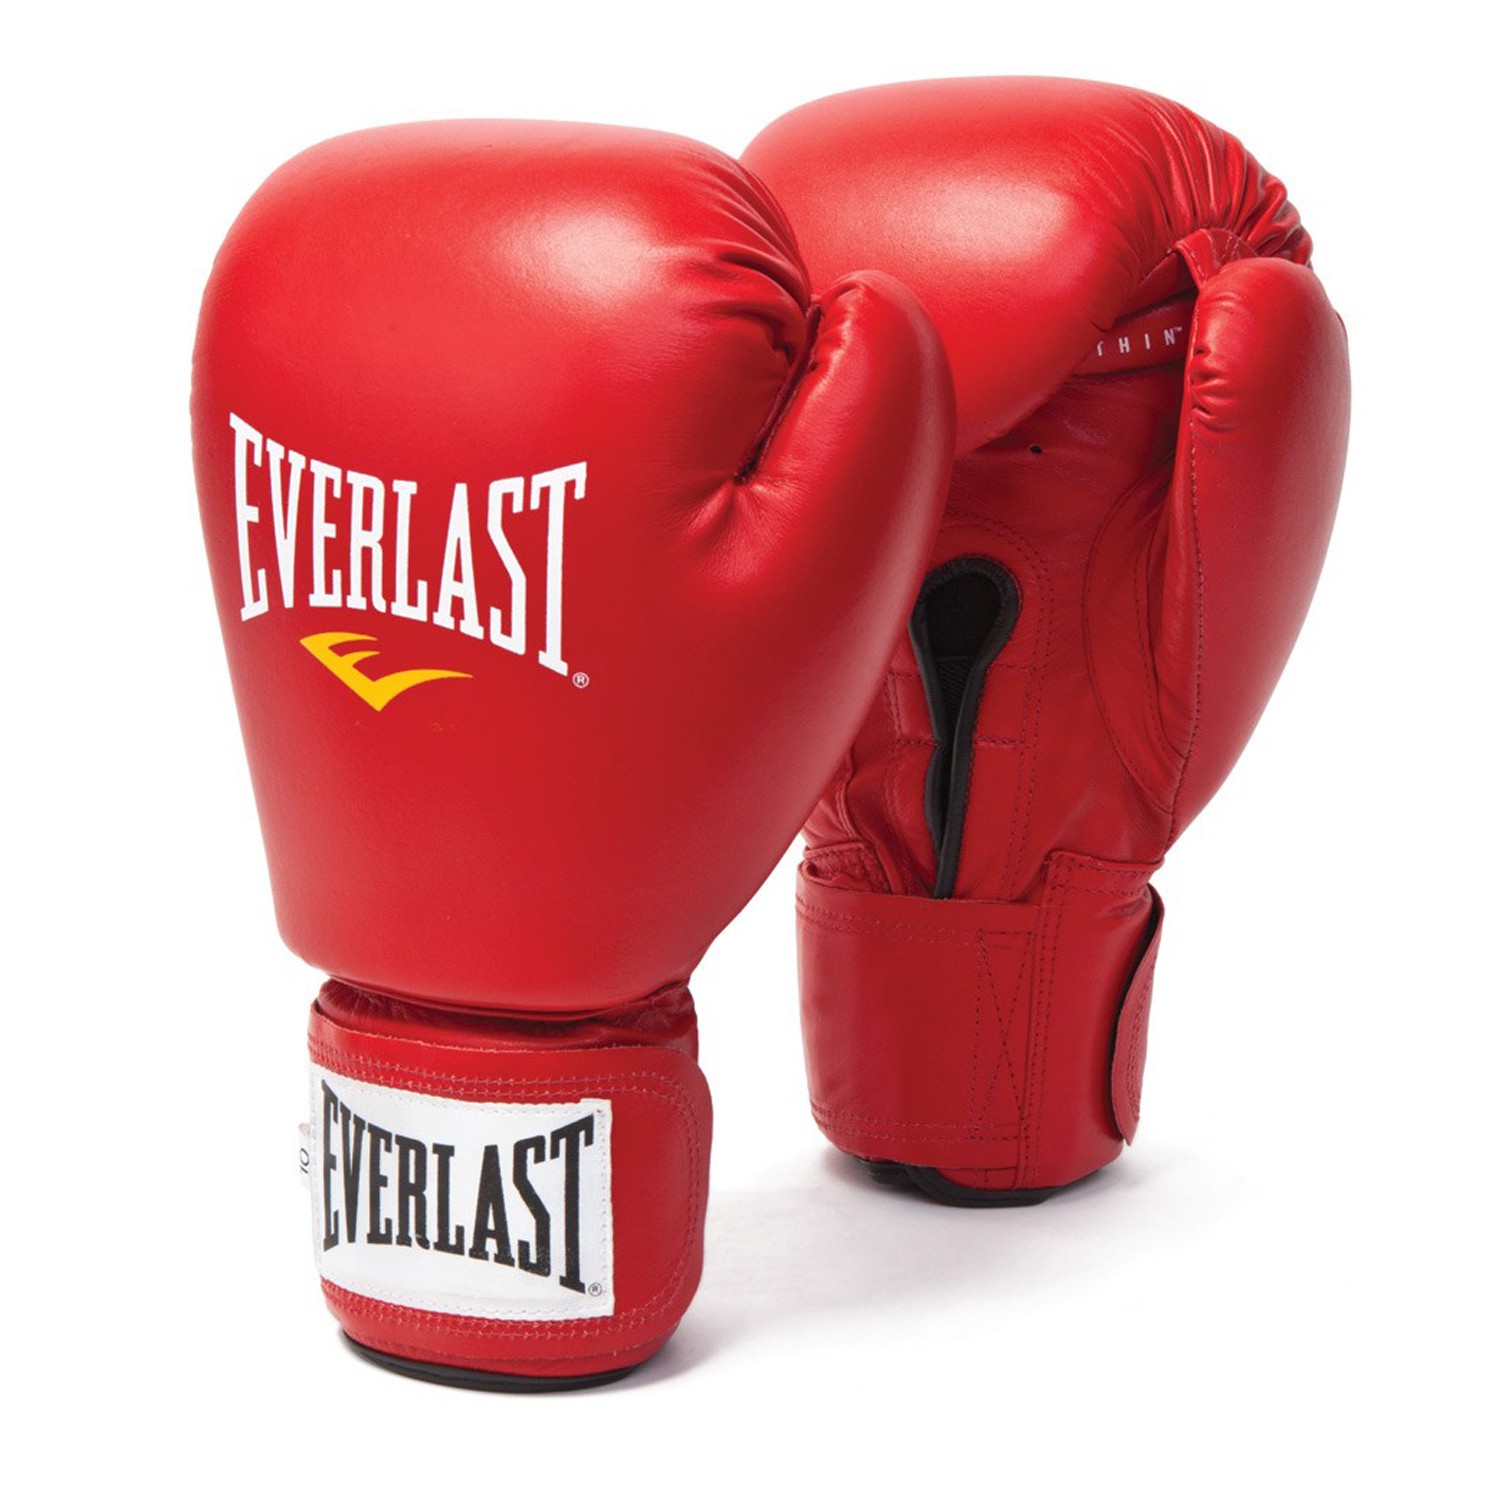 Details about   Senior boxing gloves focus pads hand wraps fight colour red black 10oz set 